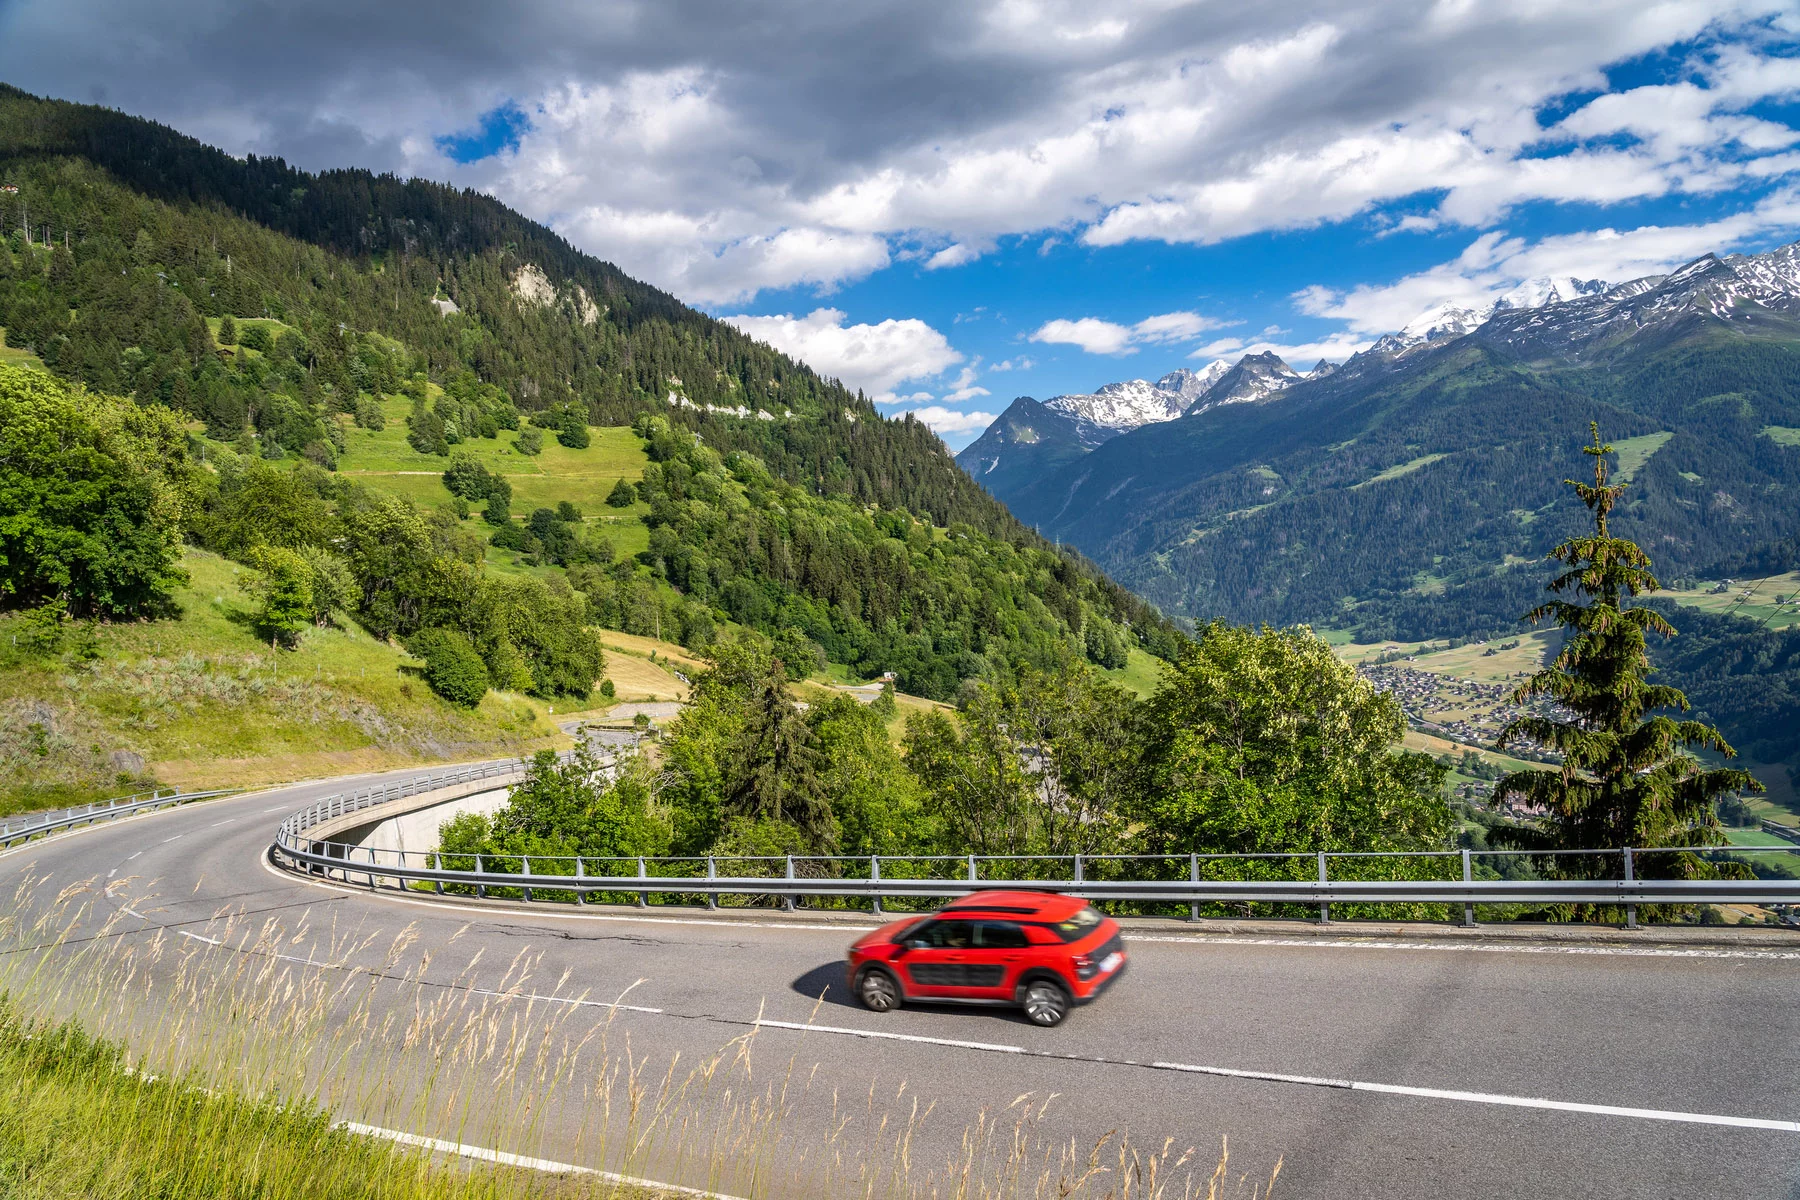 Driving through a mountain pass in Switzerland